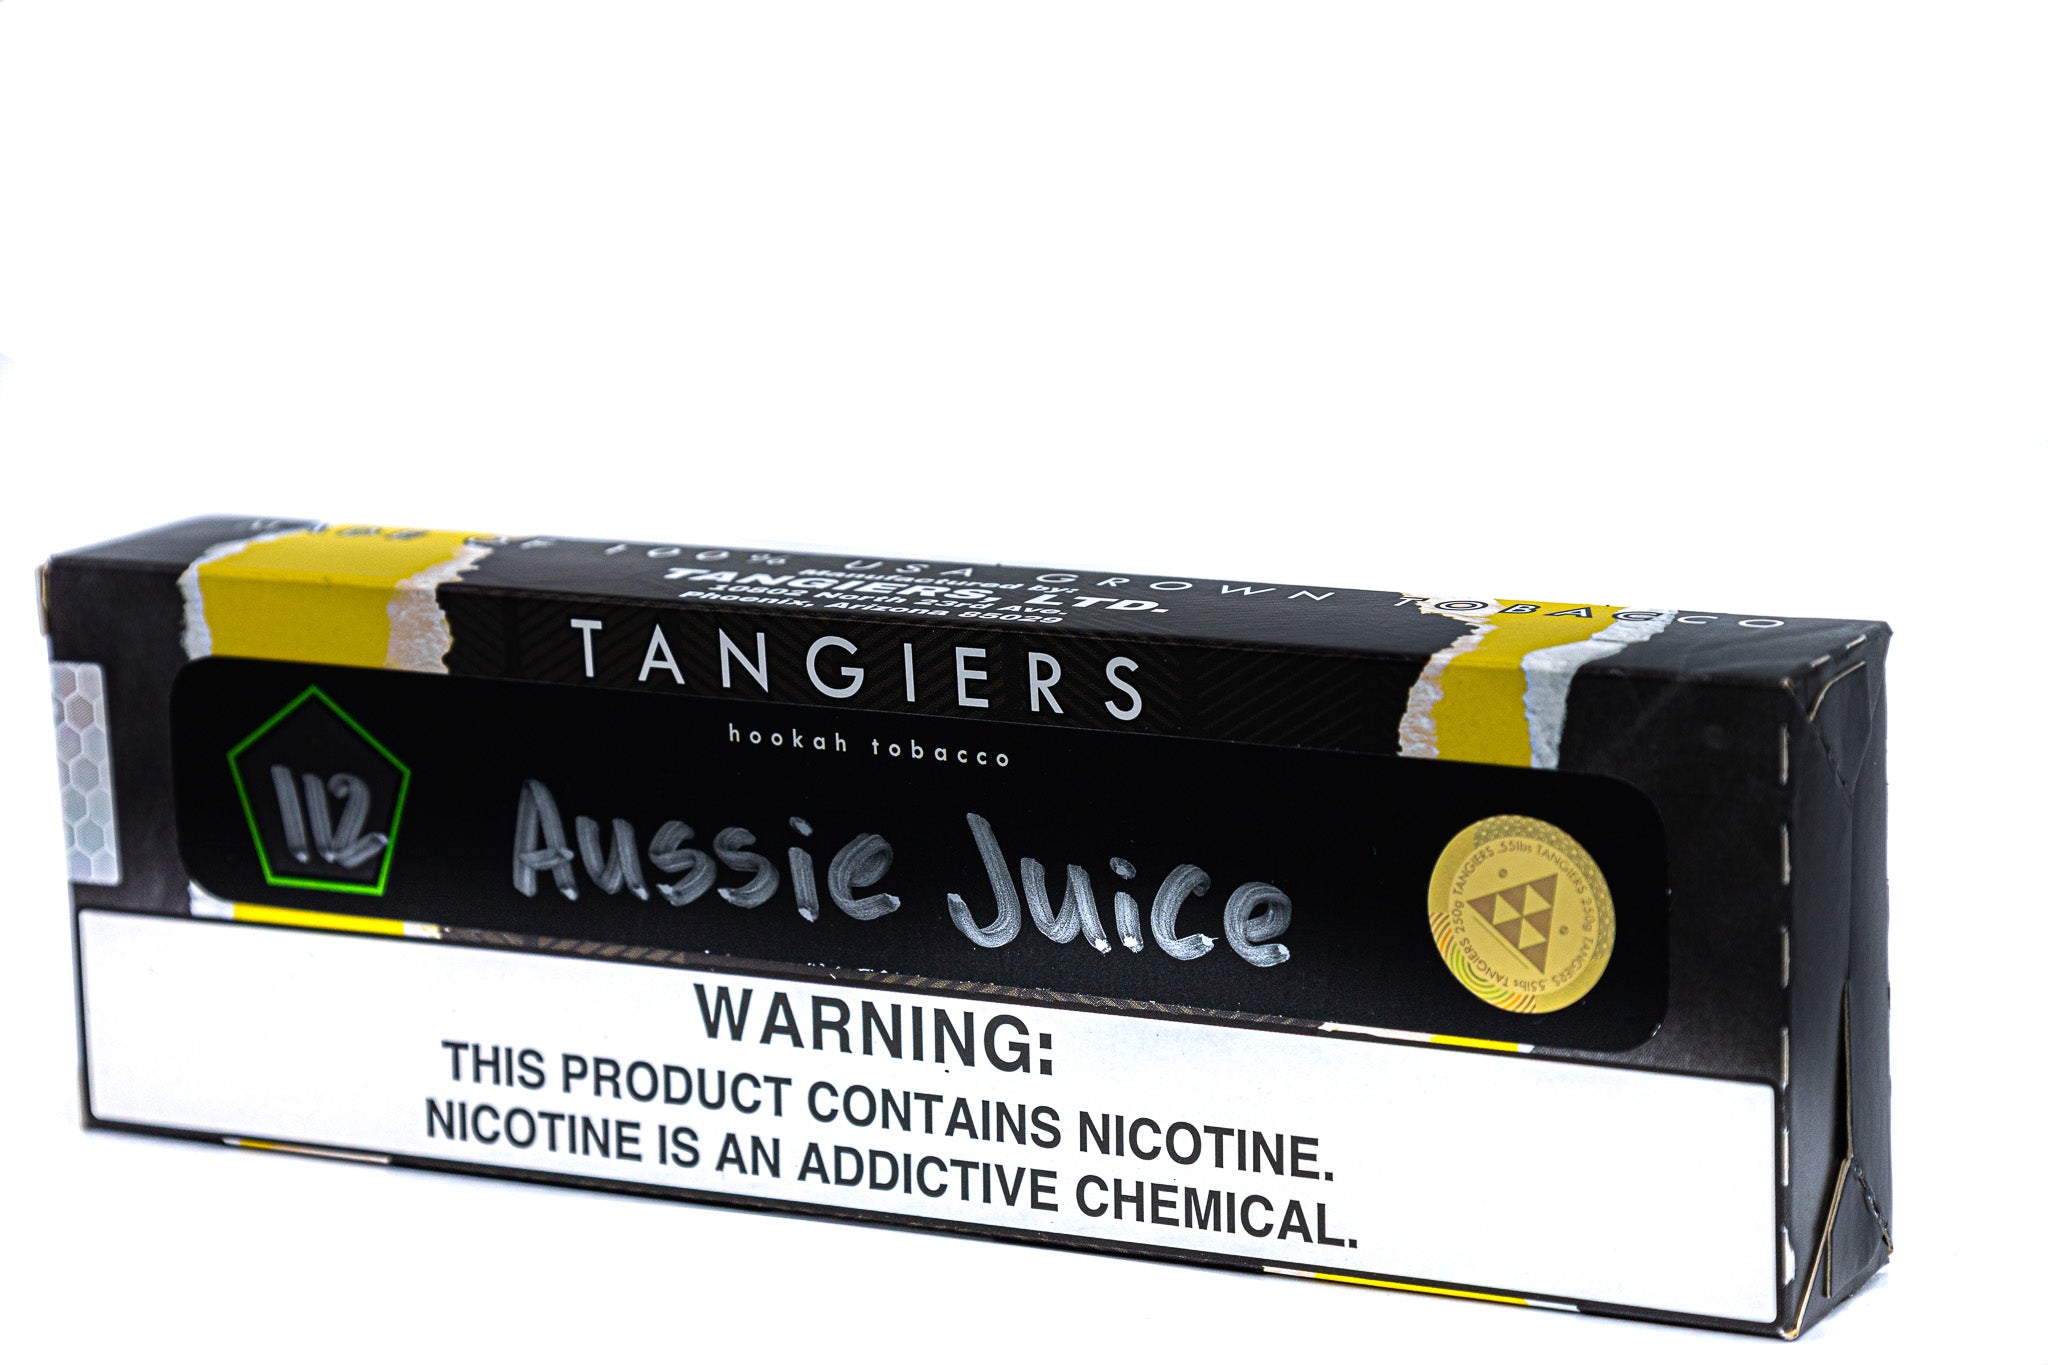 Tangiers Aussie Juice Birquq 250G - Smoxygen